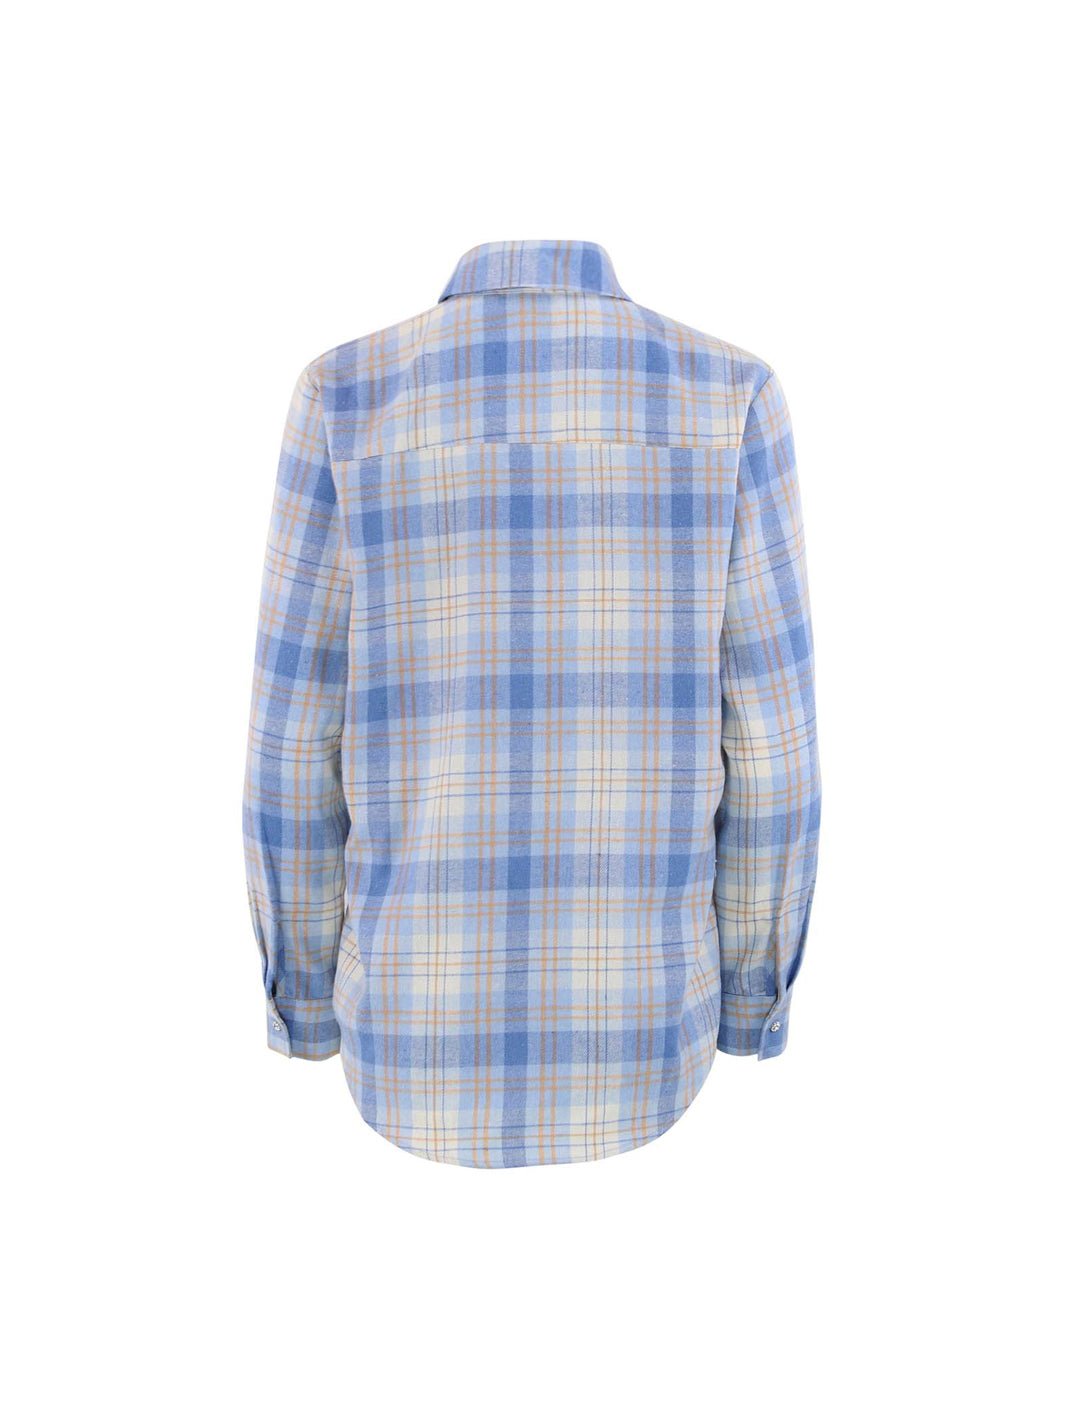 Continue Terese shirt light blue check - Online-Mode